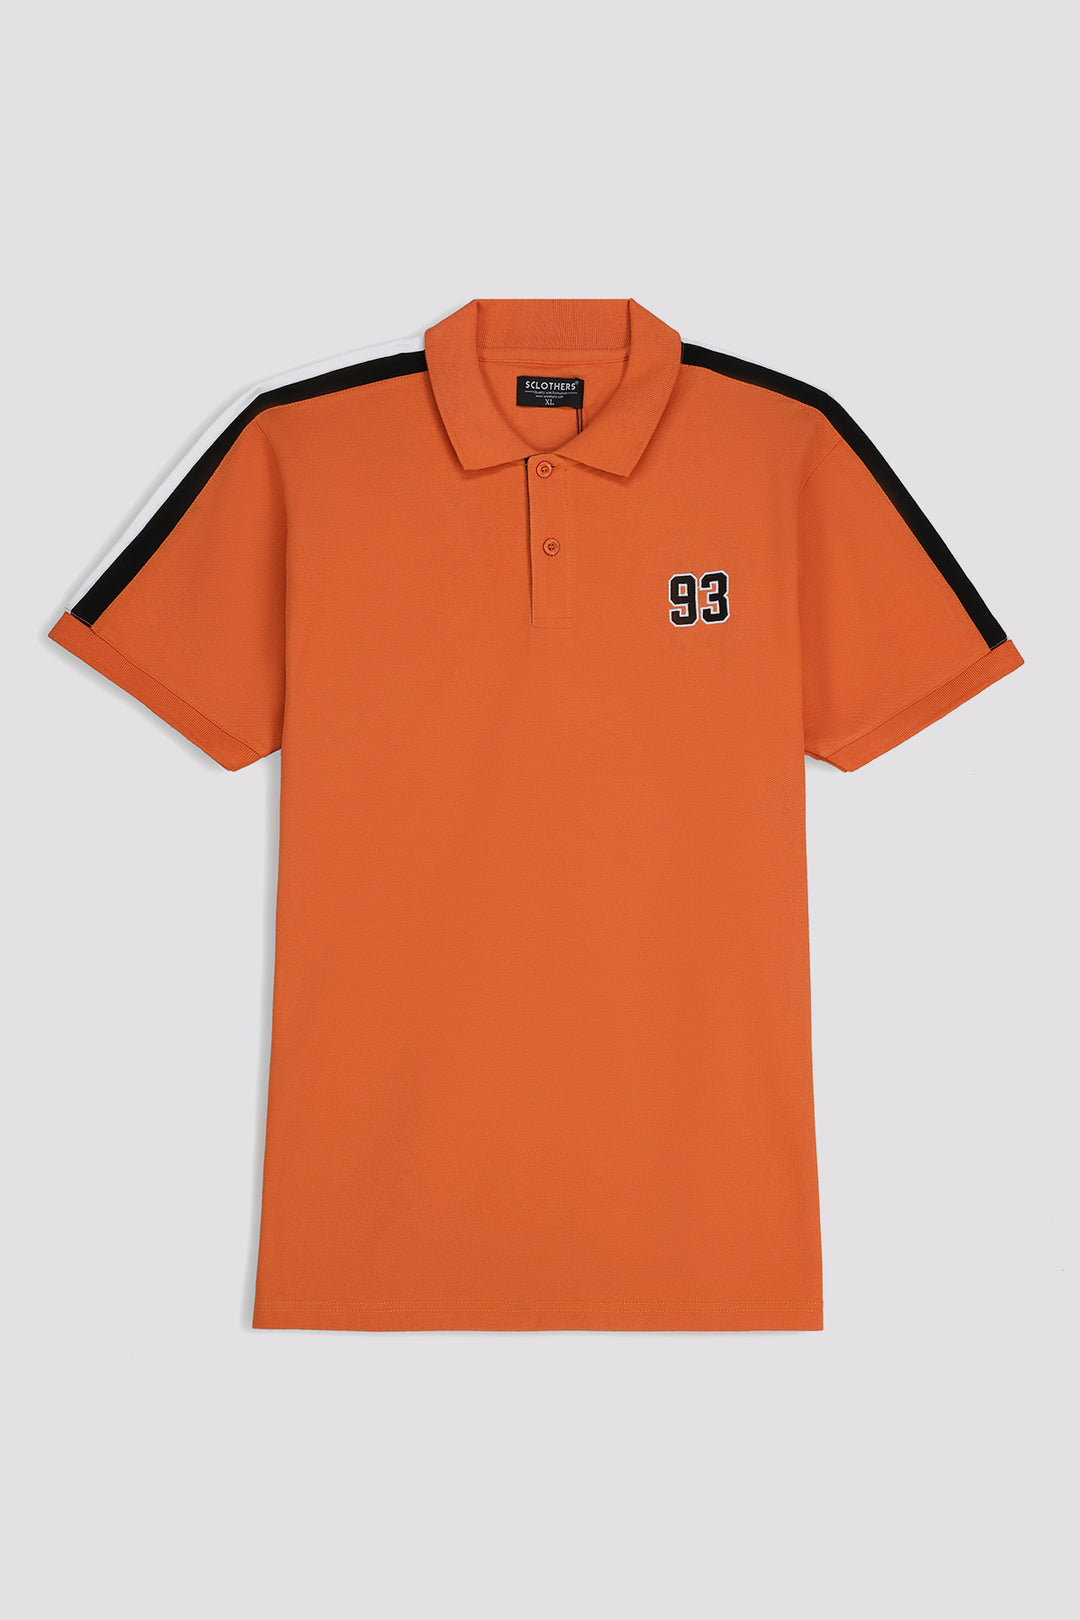 Orange 93 Embroidered Polo Shirt - S23 - MP0220R